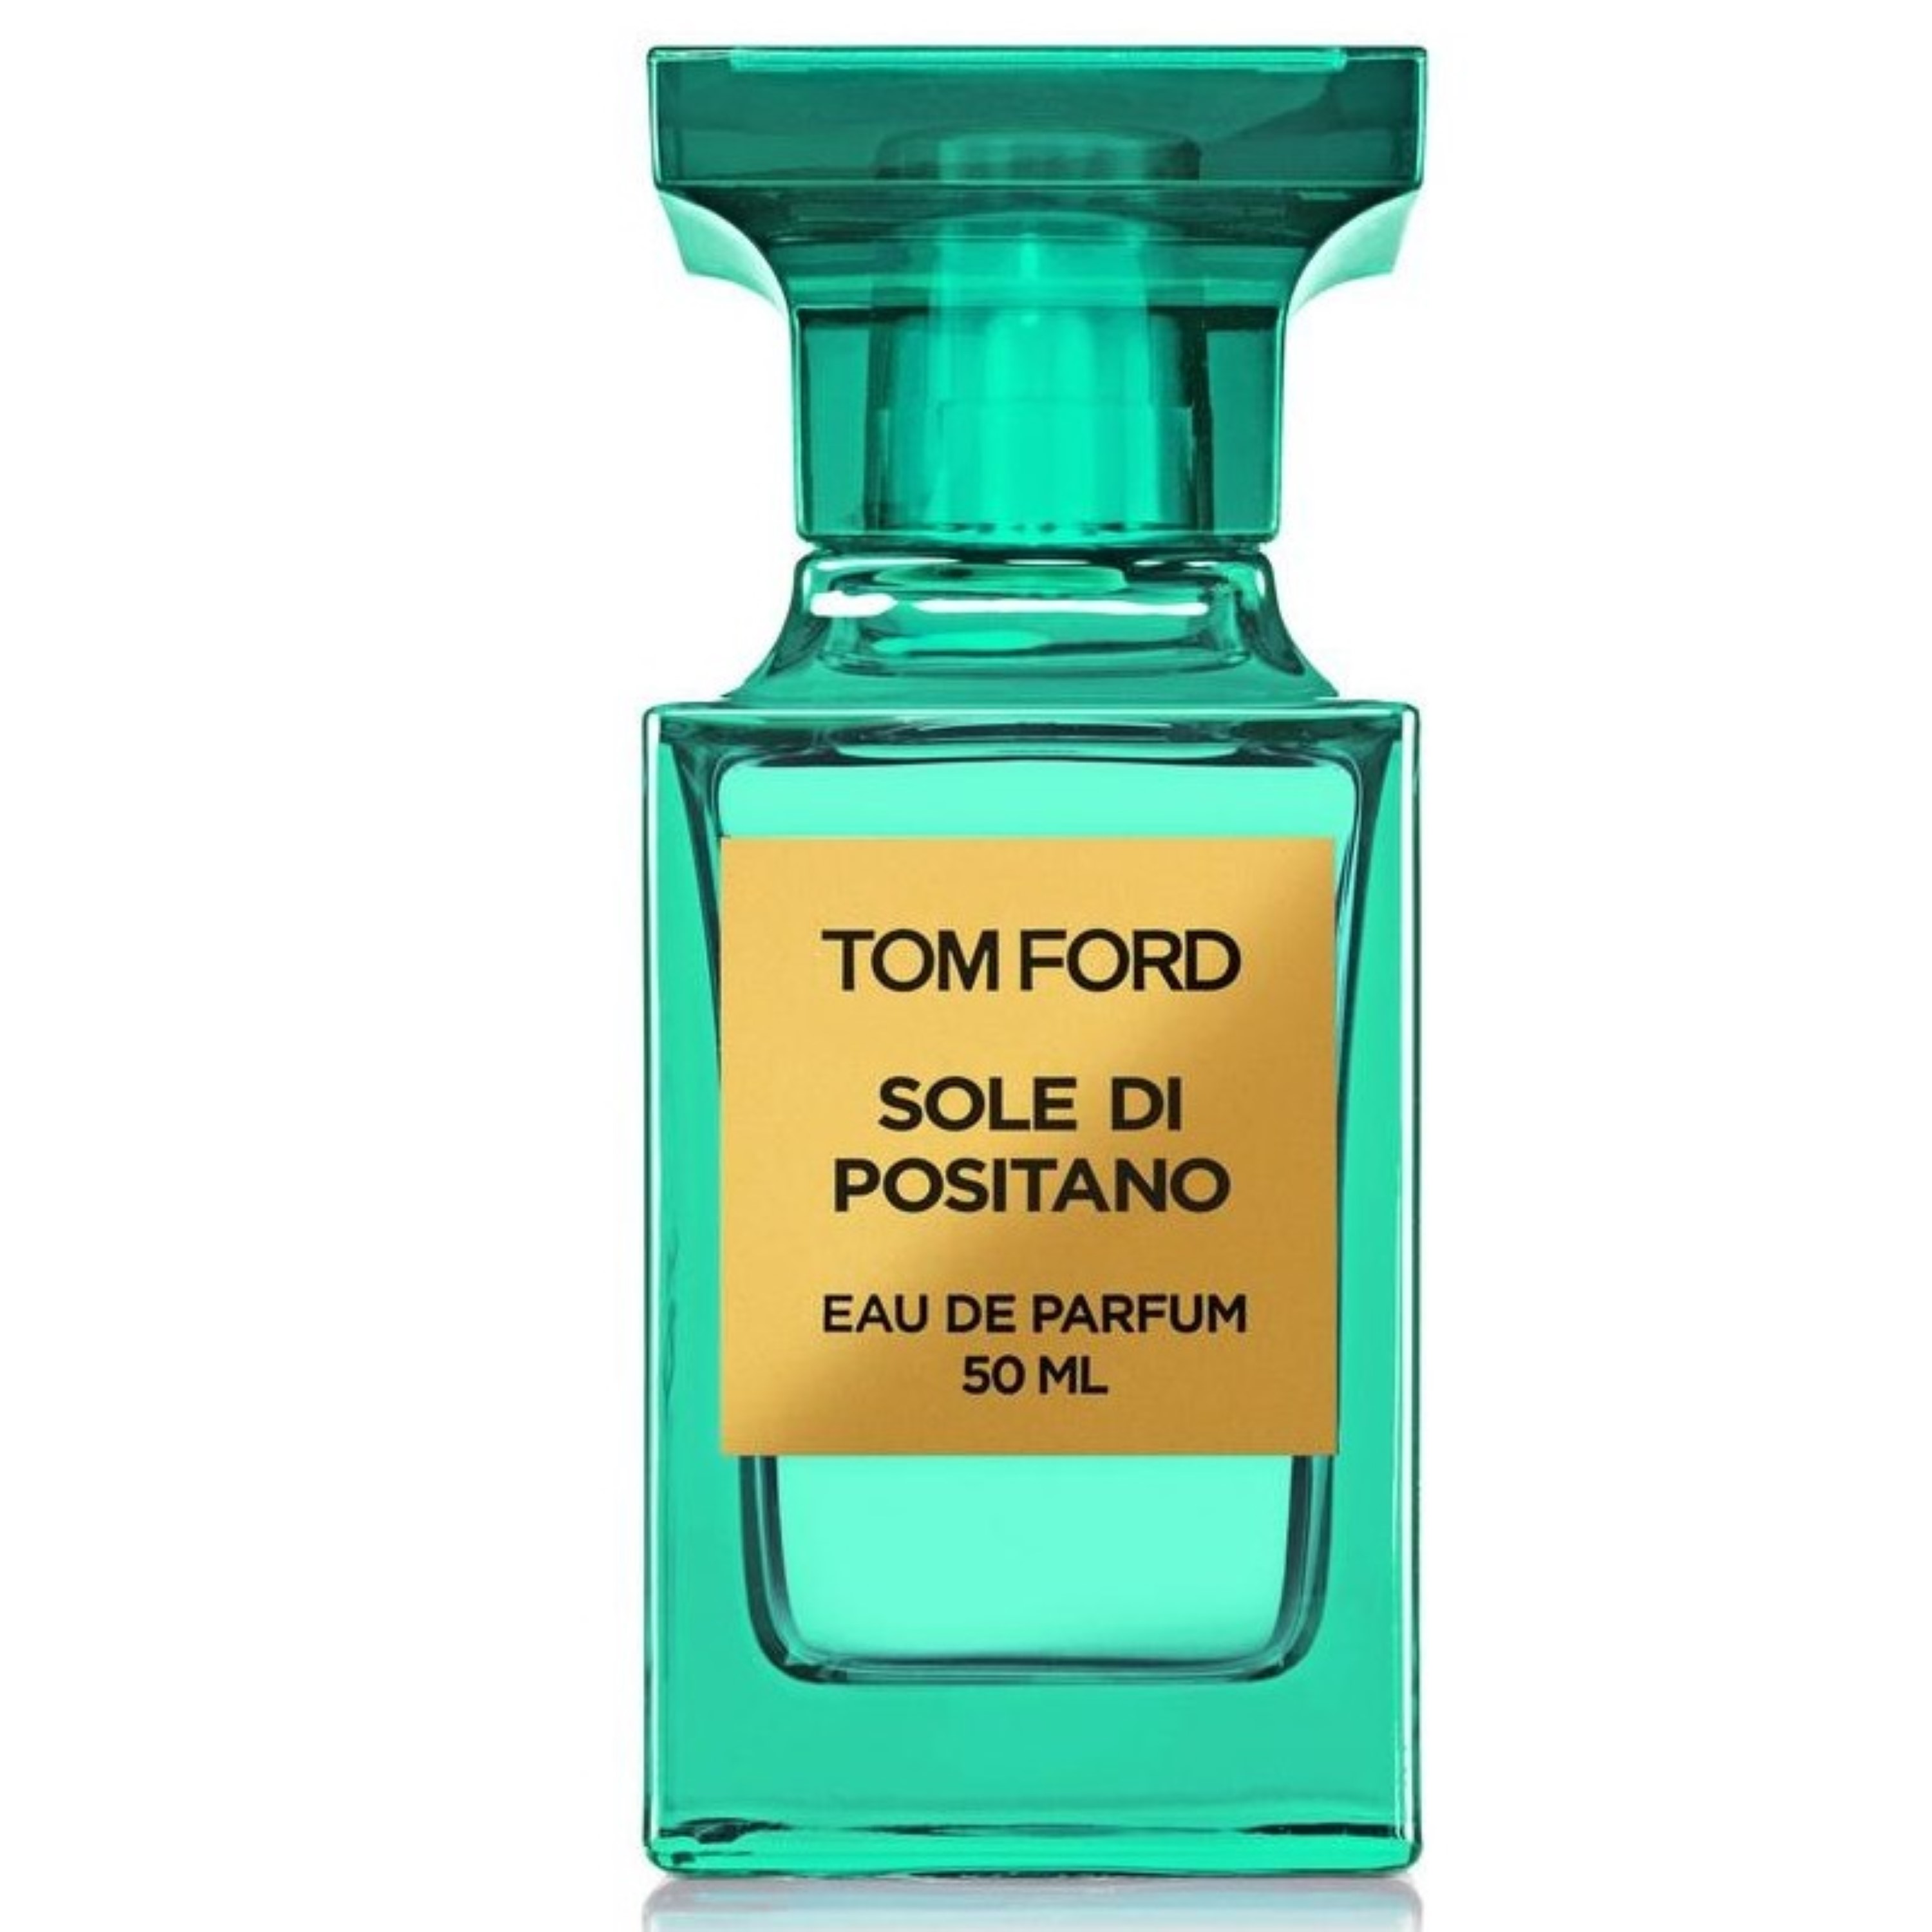 Tom Ford Sole Di Positano EDP 50 ml | Wholesale | Tradeling